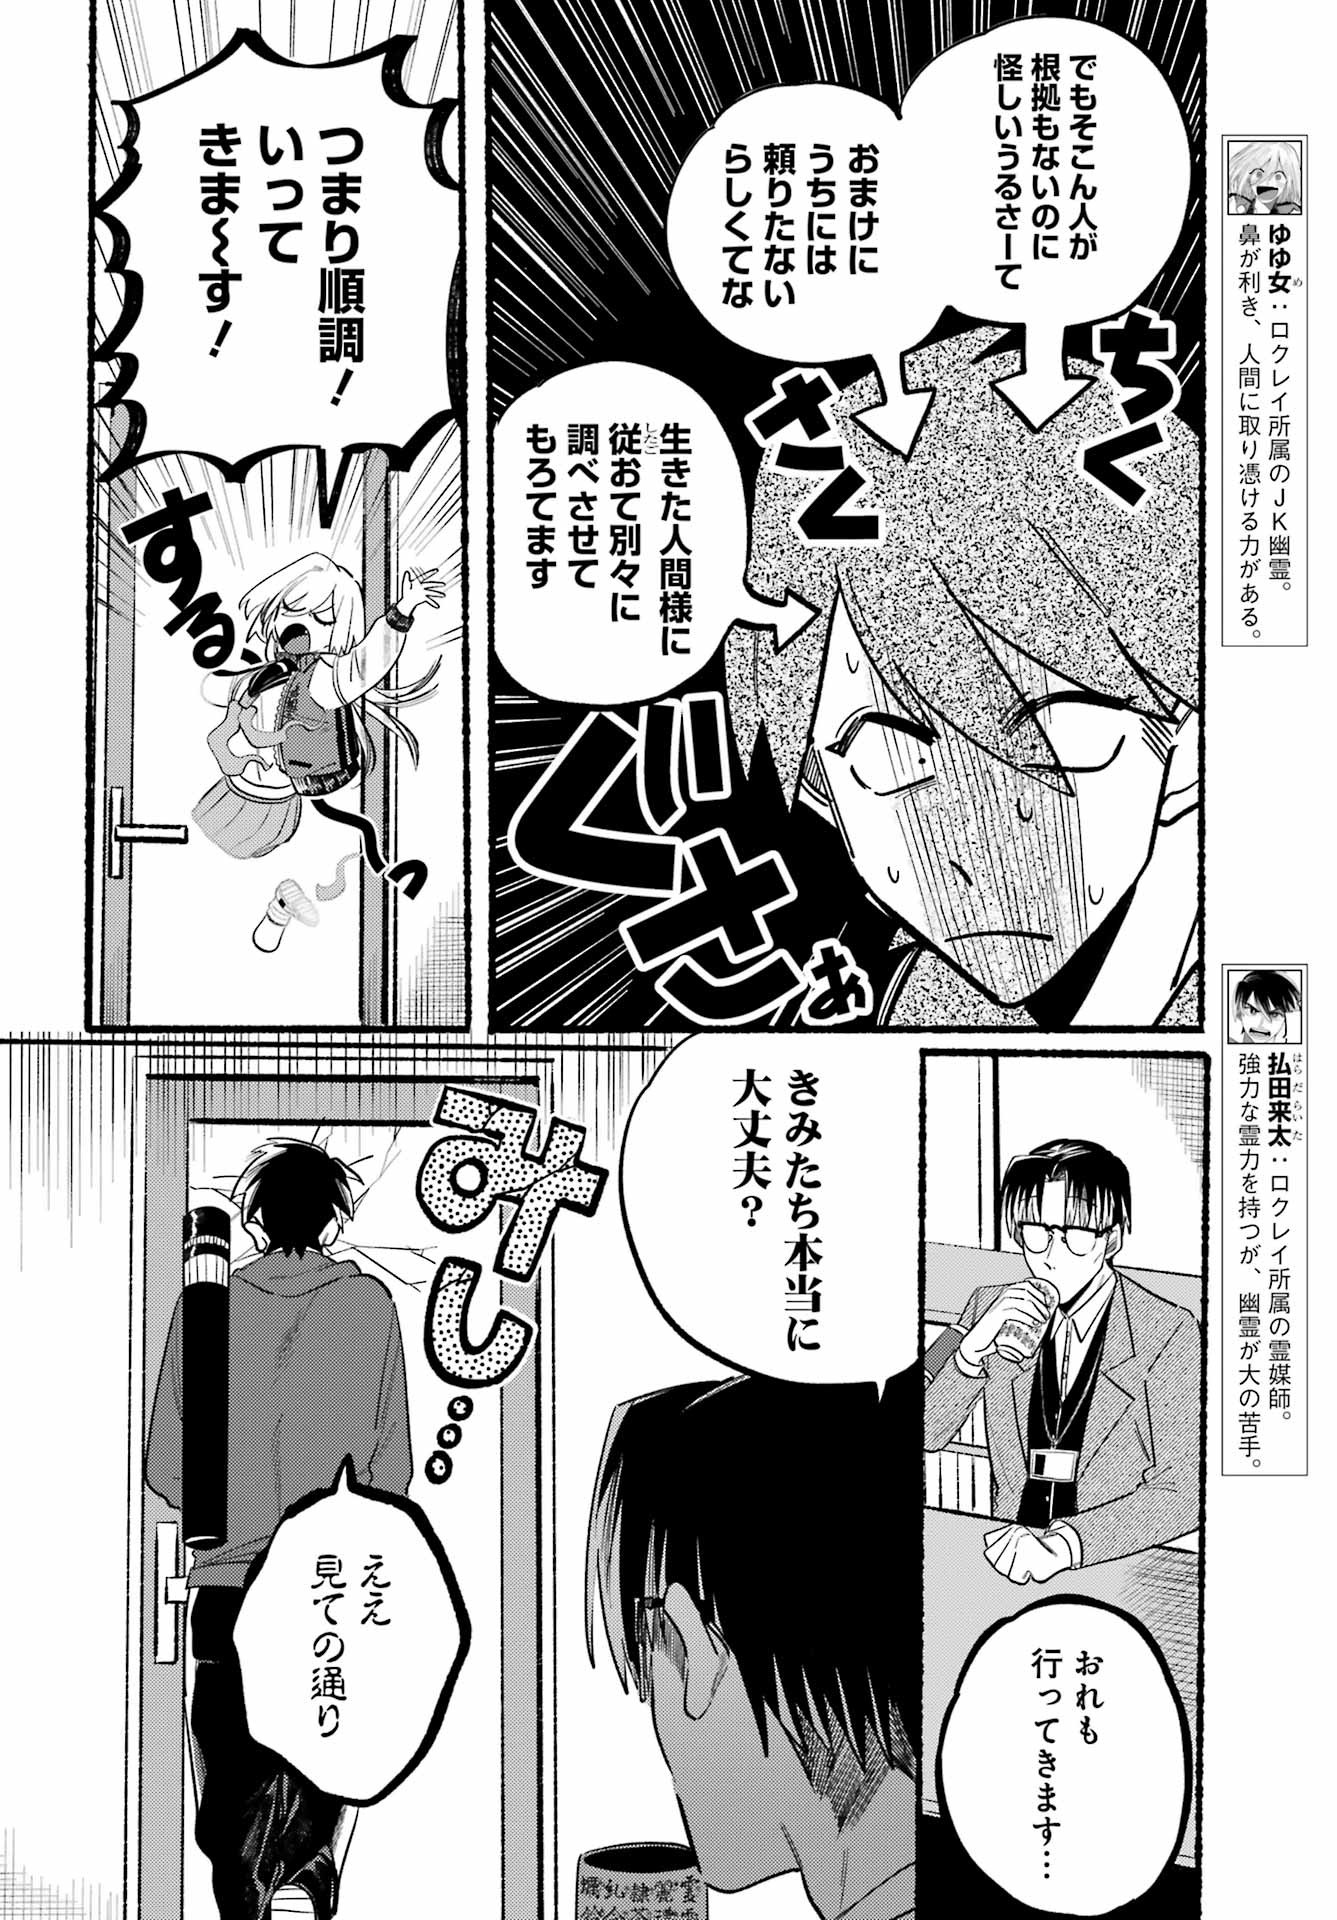 Rokurei - Tenseishi Rinne Kuyakusho Dairokkanbu Joreika Katsudouki - Chapter 06 - Page 2